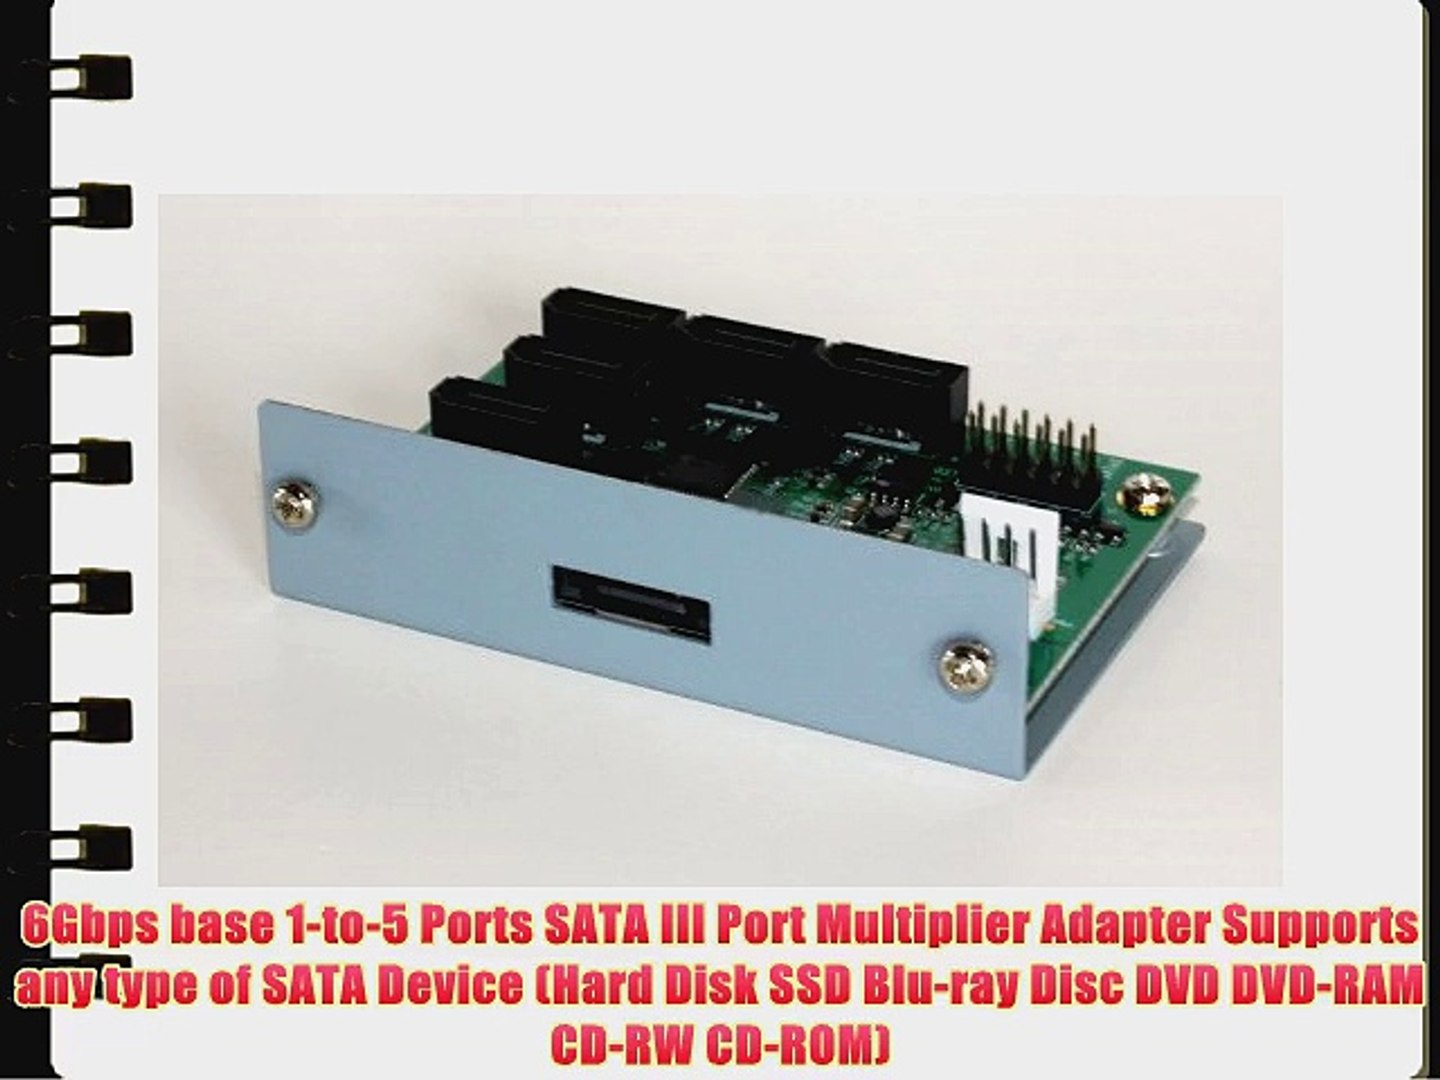 Oodelay 5x1 eSATA 6 Gbps SATA III Port Multiplier - video Dailymotion